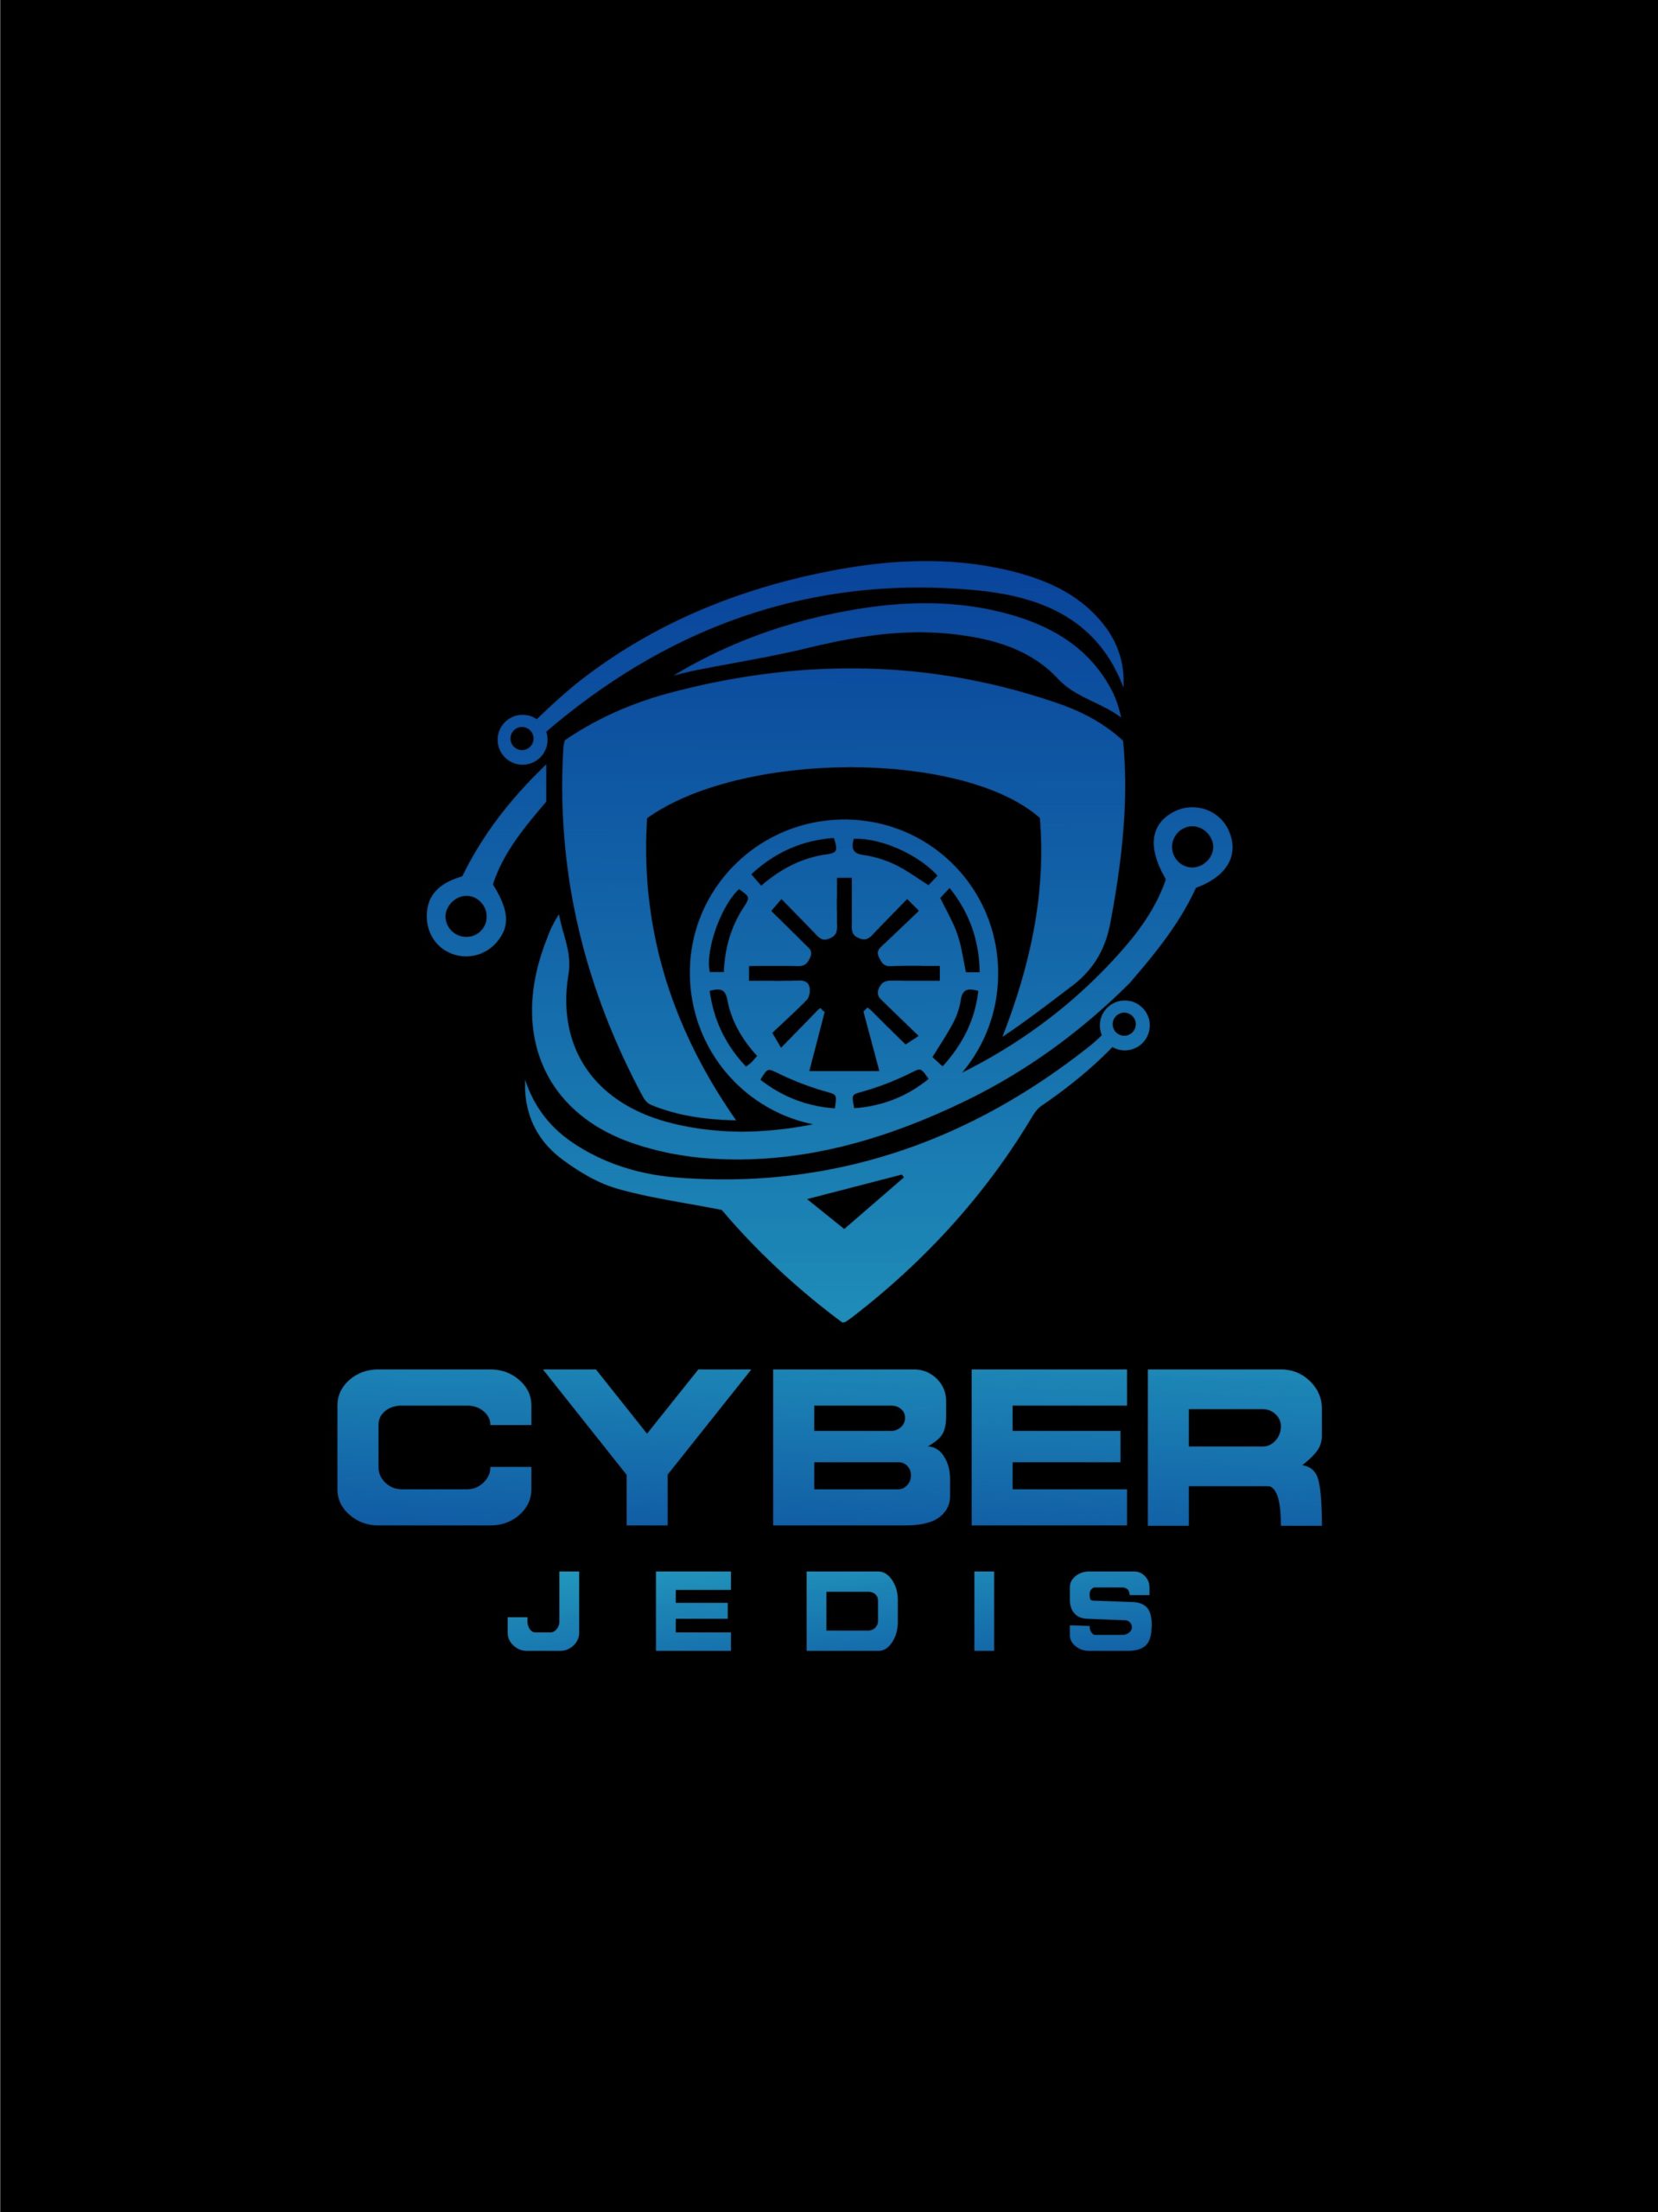 UTSA Cyber Jedis Student Club Logo